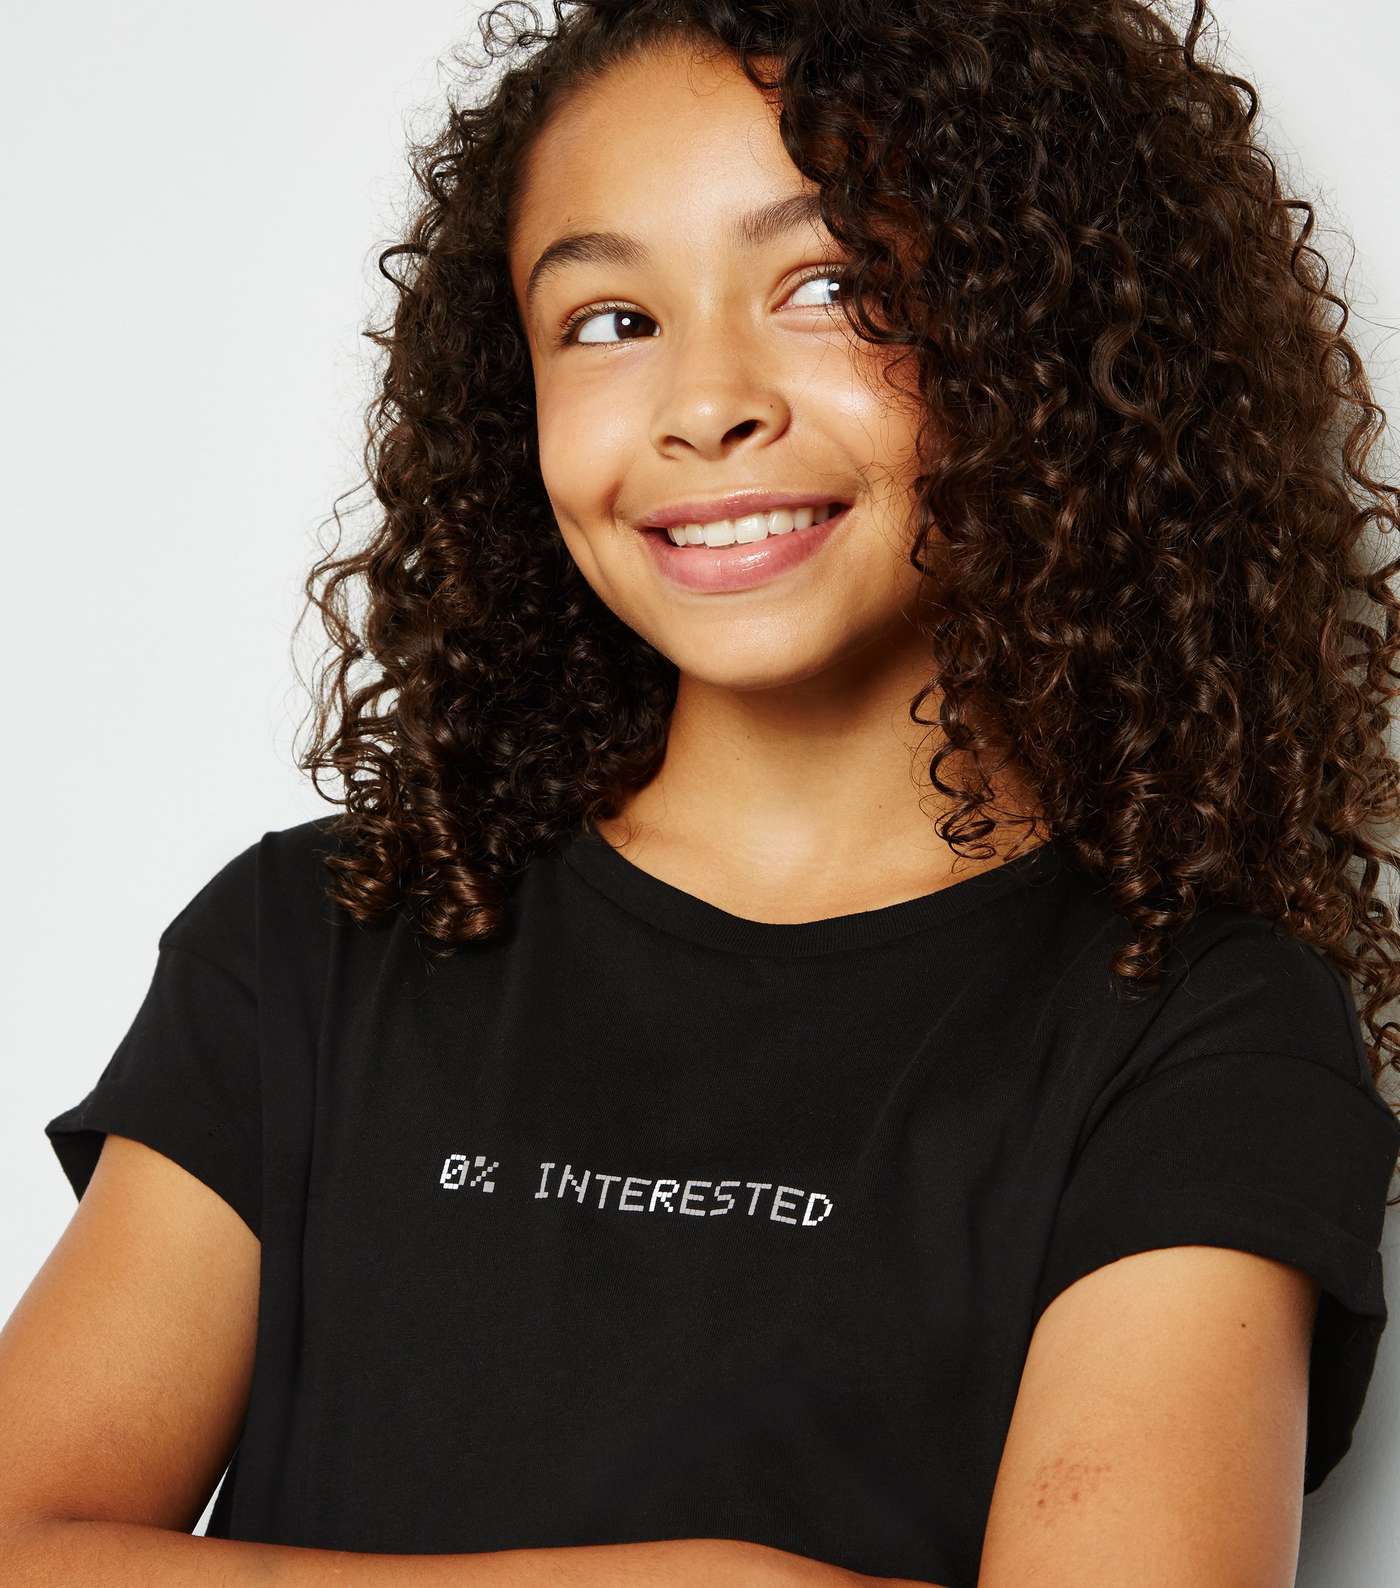 Girls Black 0% Interested Slogan T-Shirt Image 3